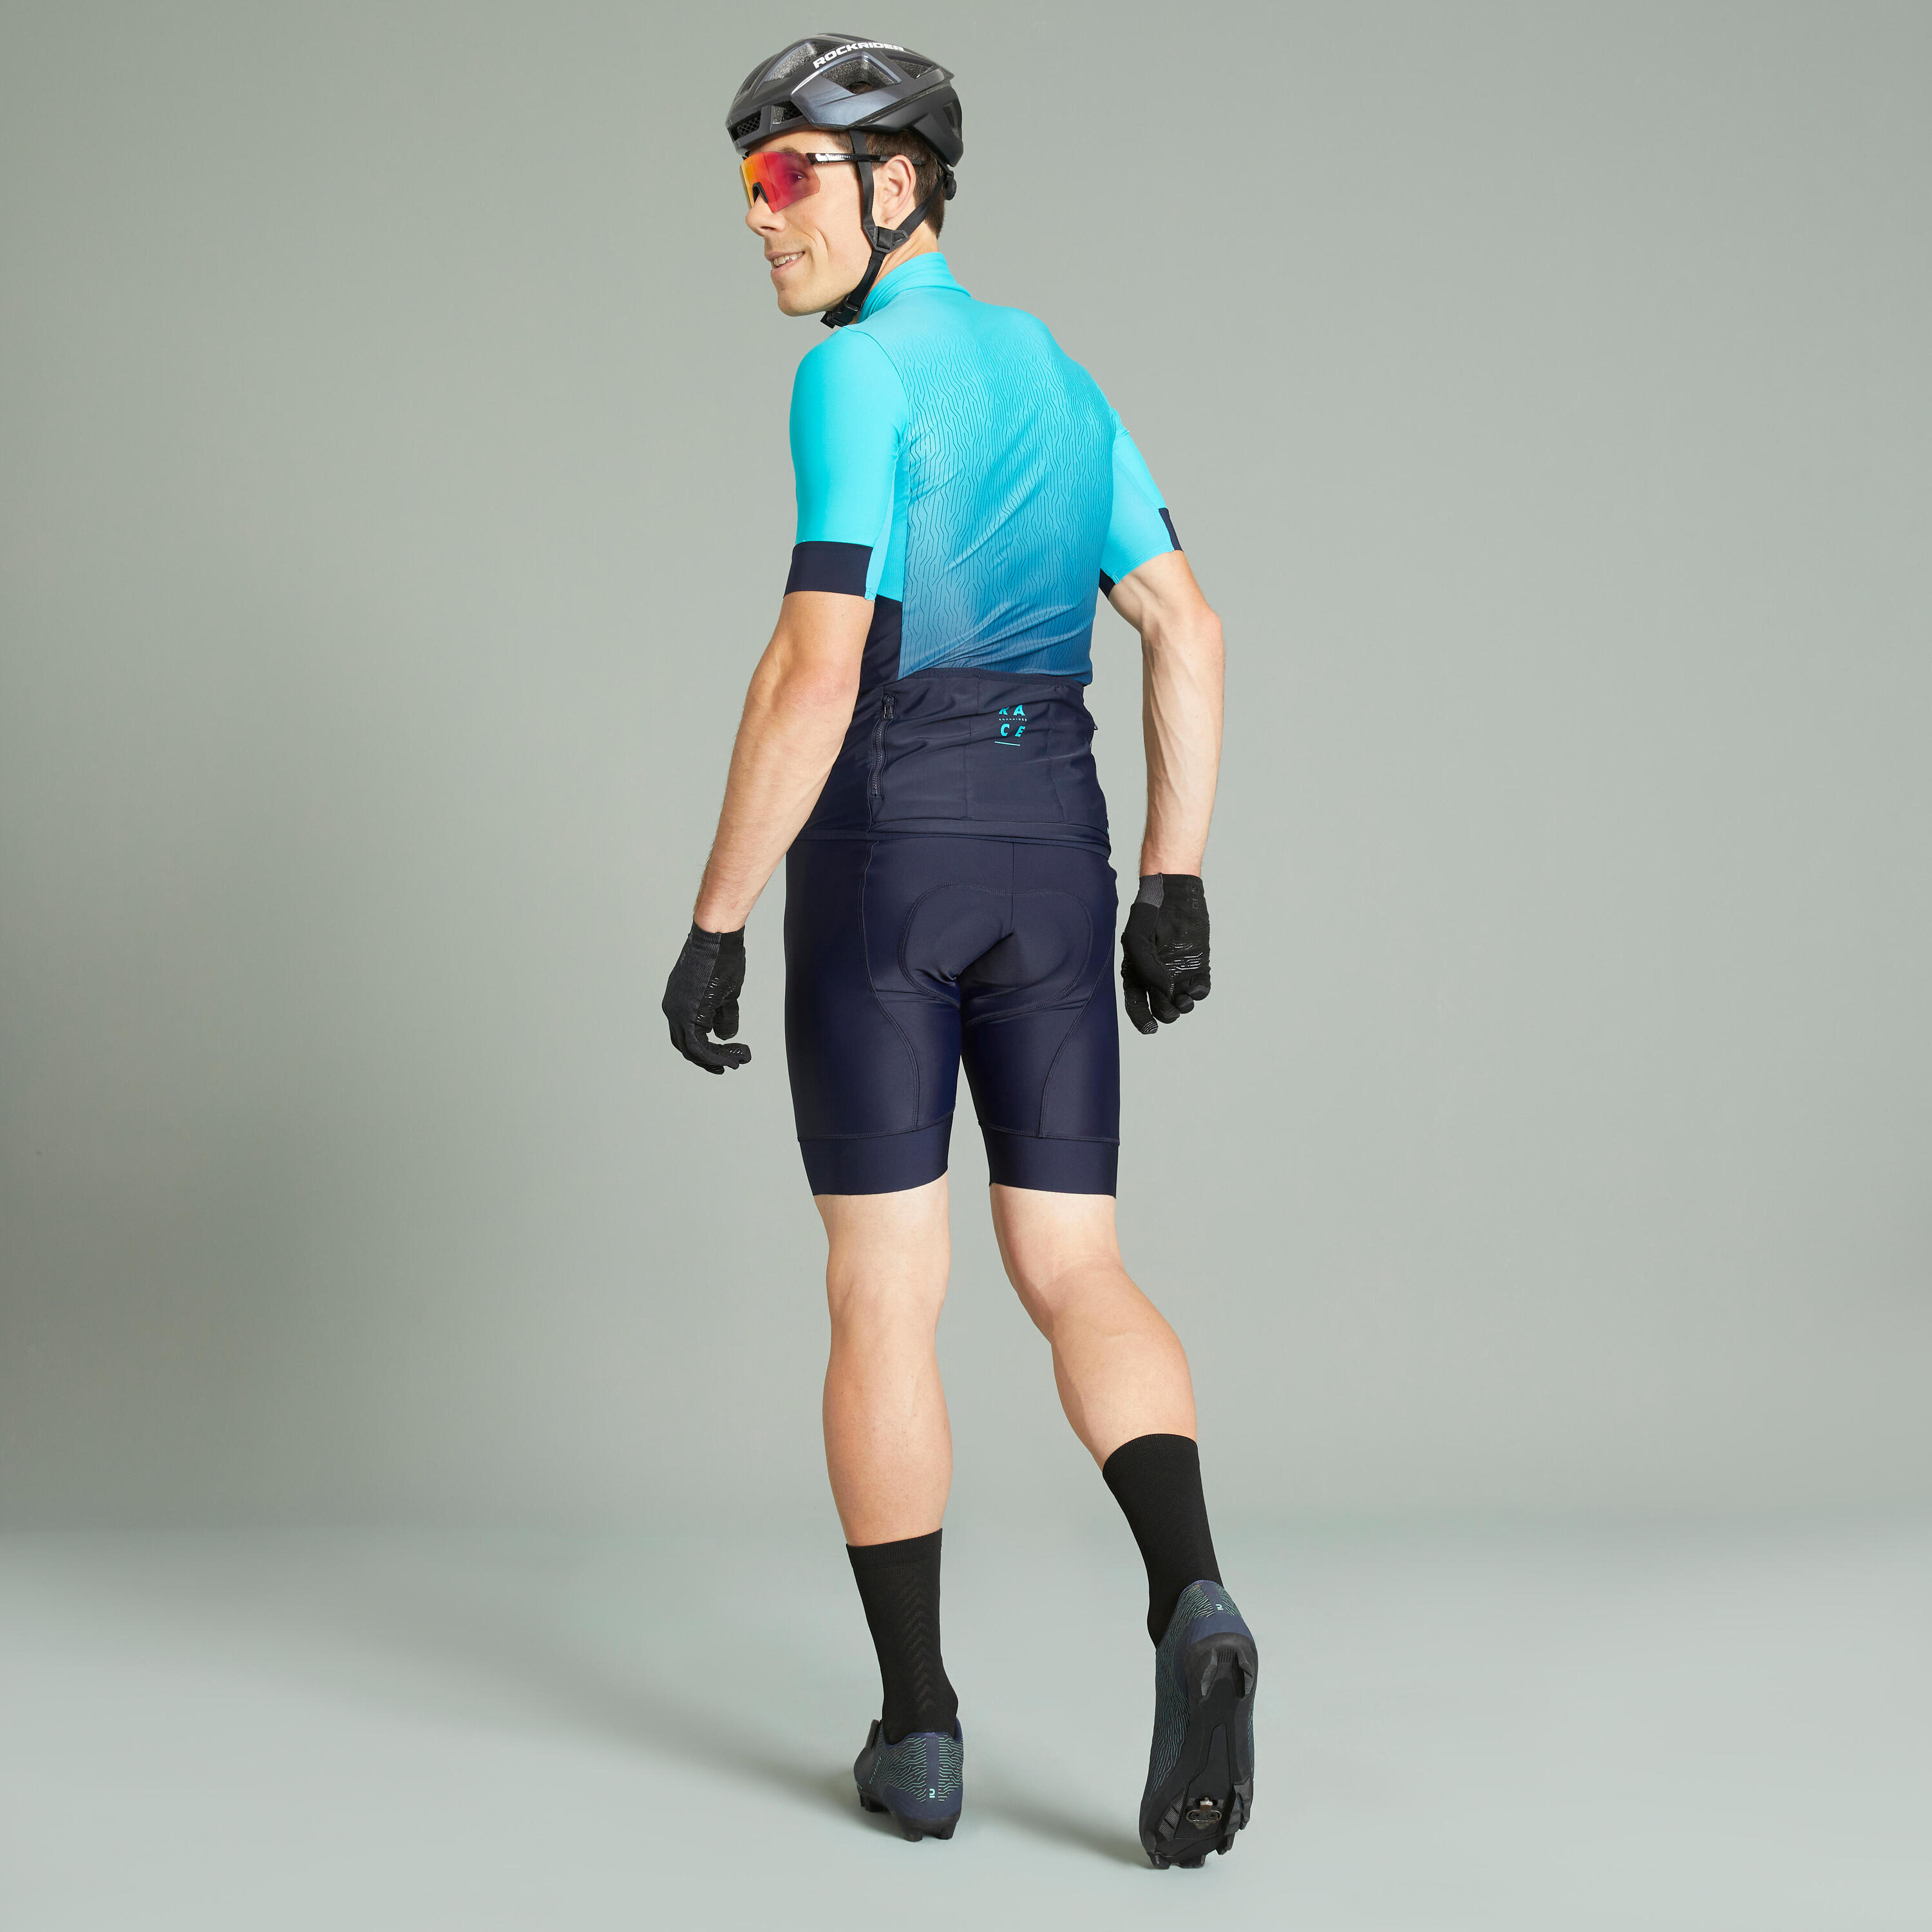 Men's Mountain Biking Bib Shorts Race 720 - Blue/Turquoise 7/9